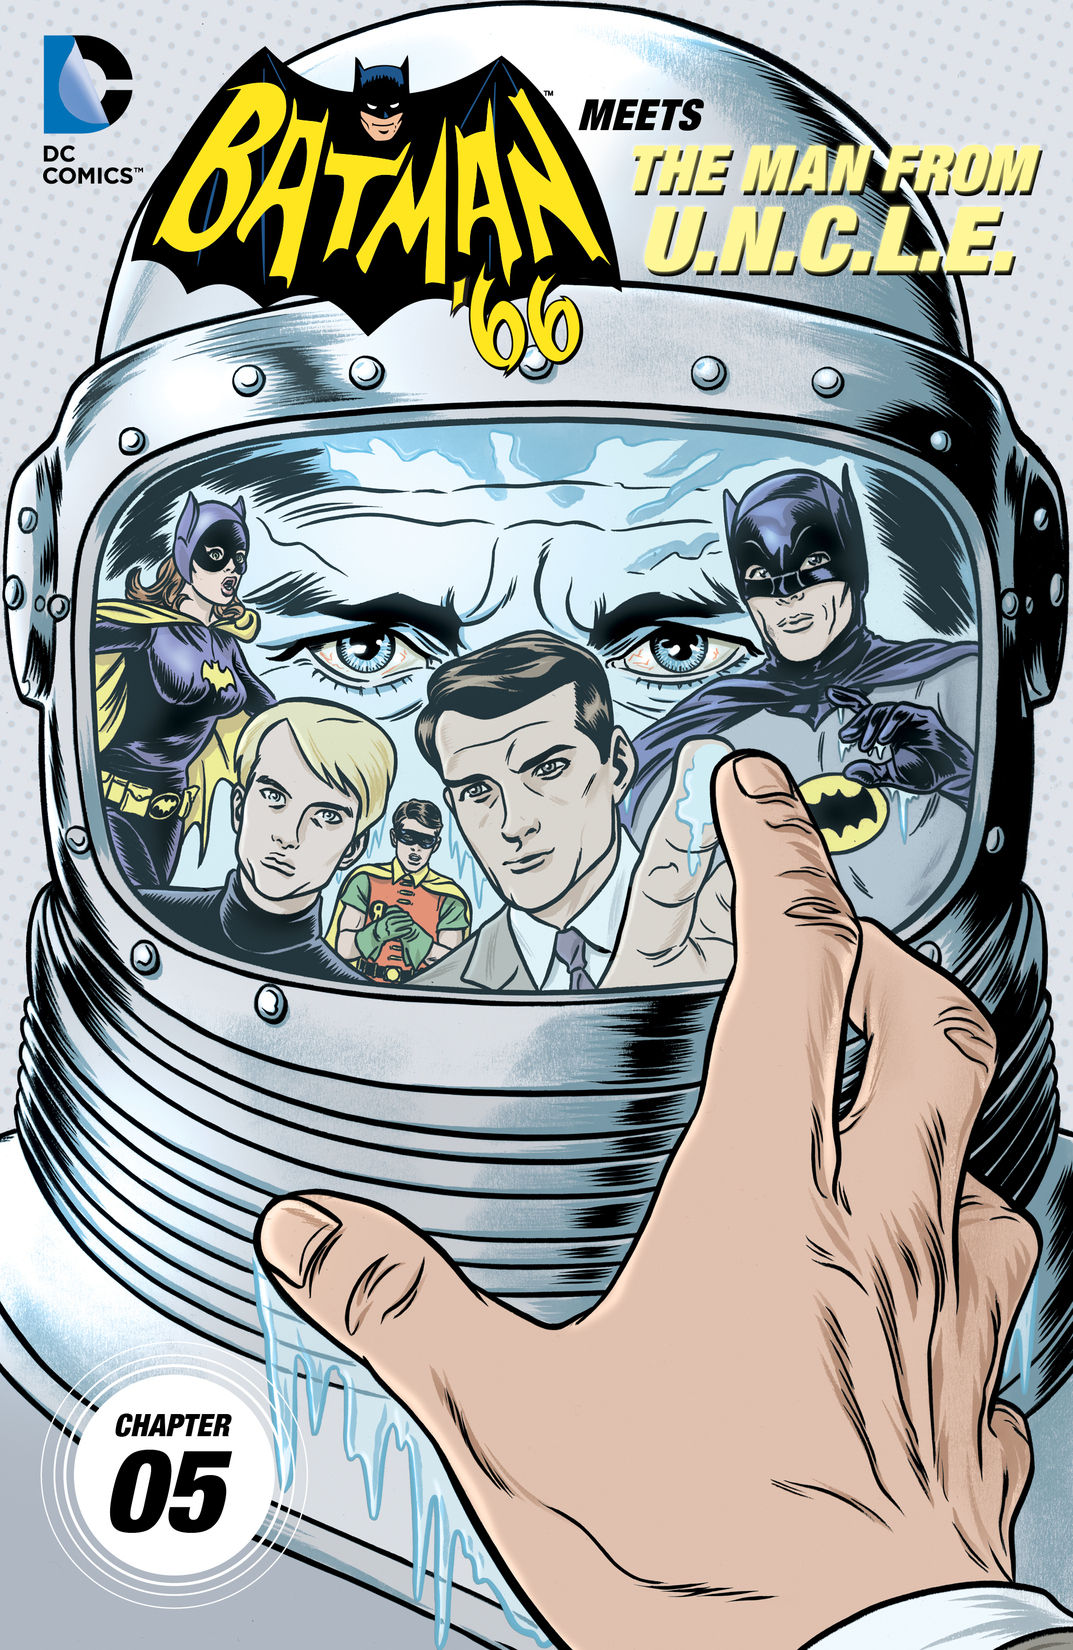 Batman '66 Meets The Man From U.N.C.L.E. #5 preview images